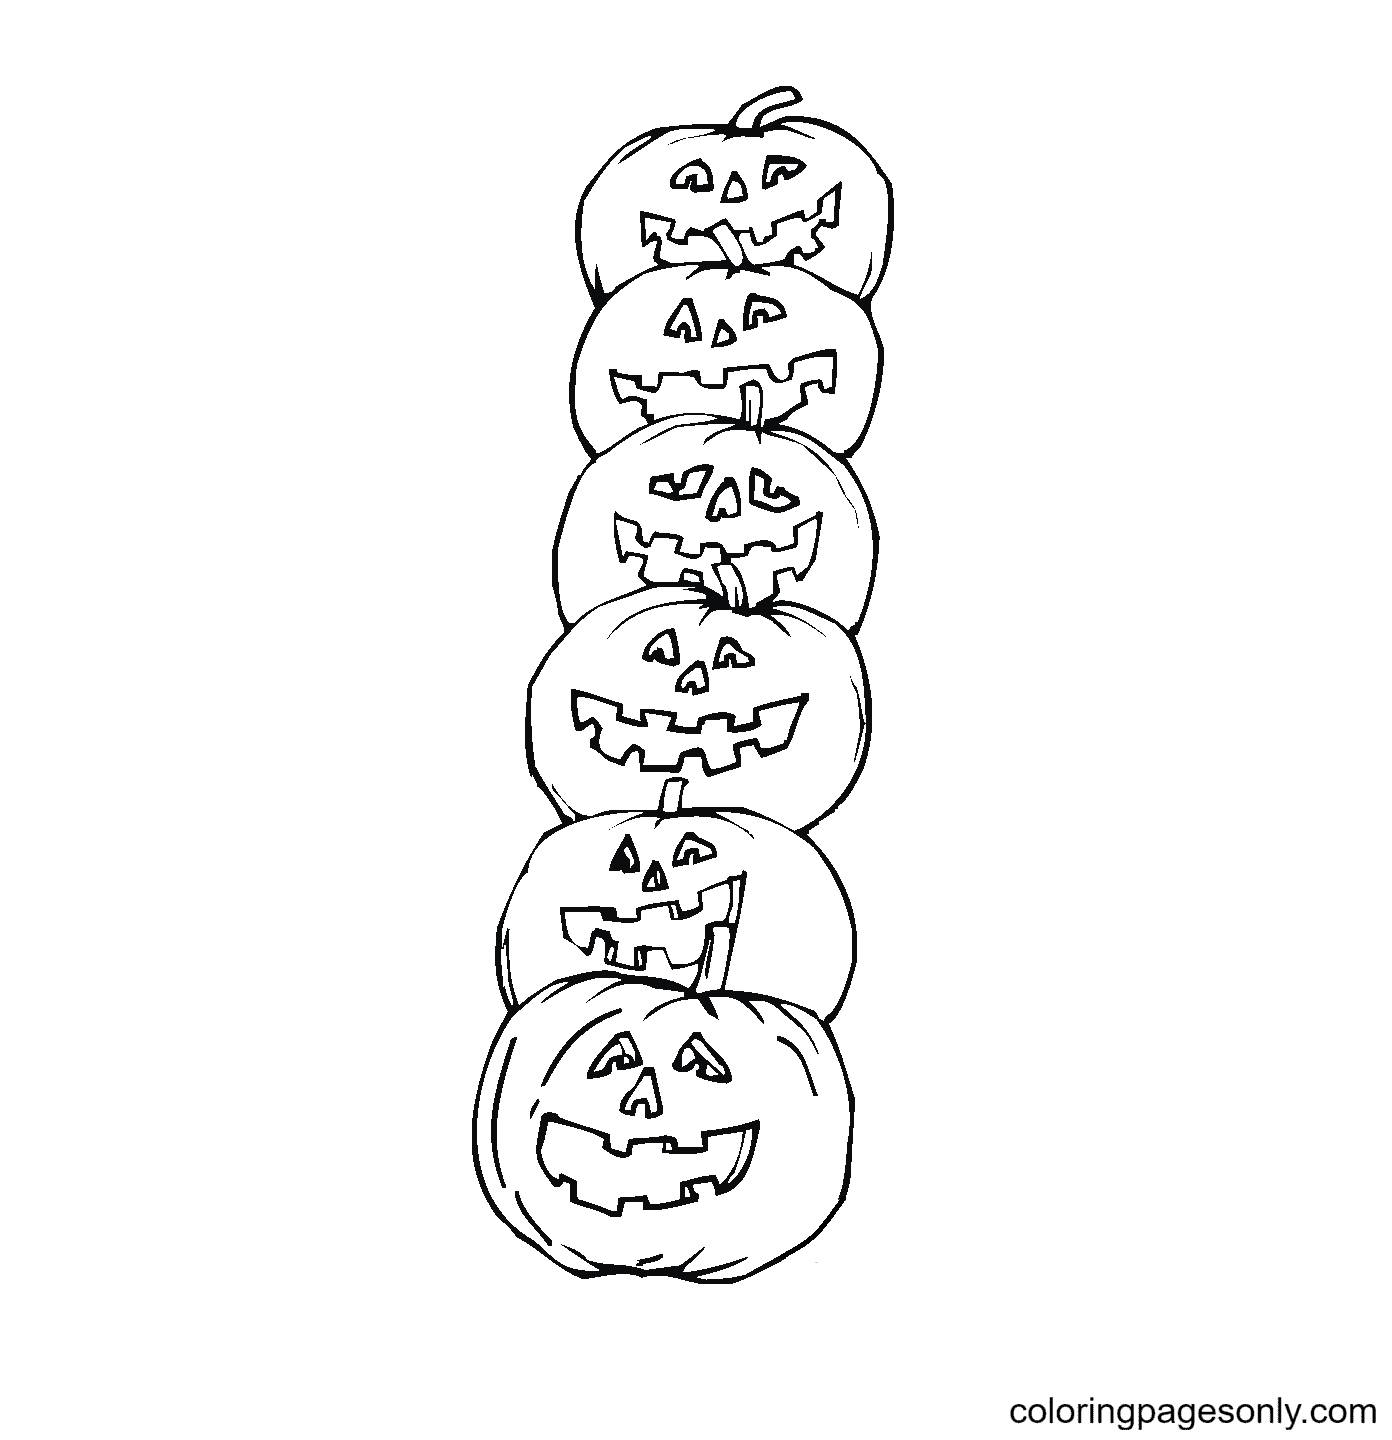 Six Funny Jack-o-lanterns Coloring Page